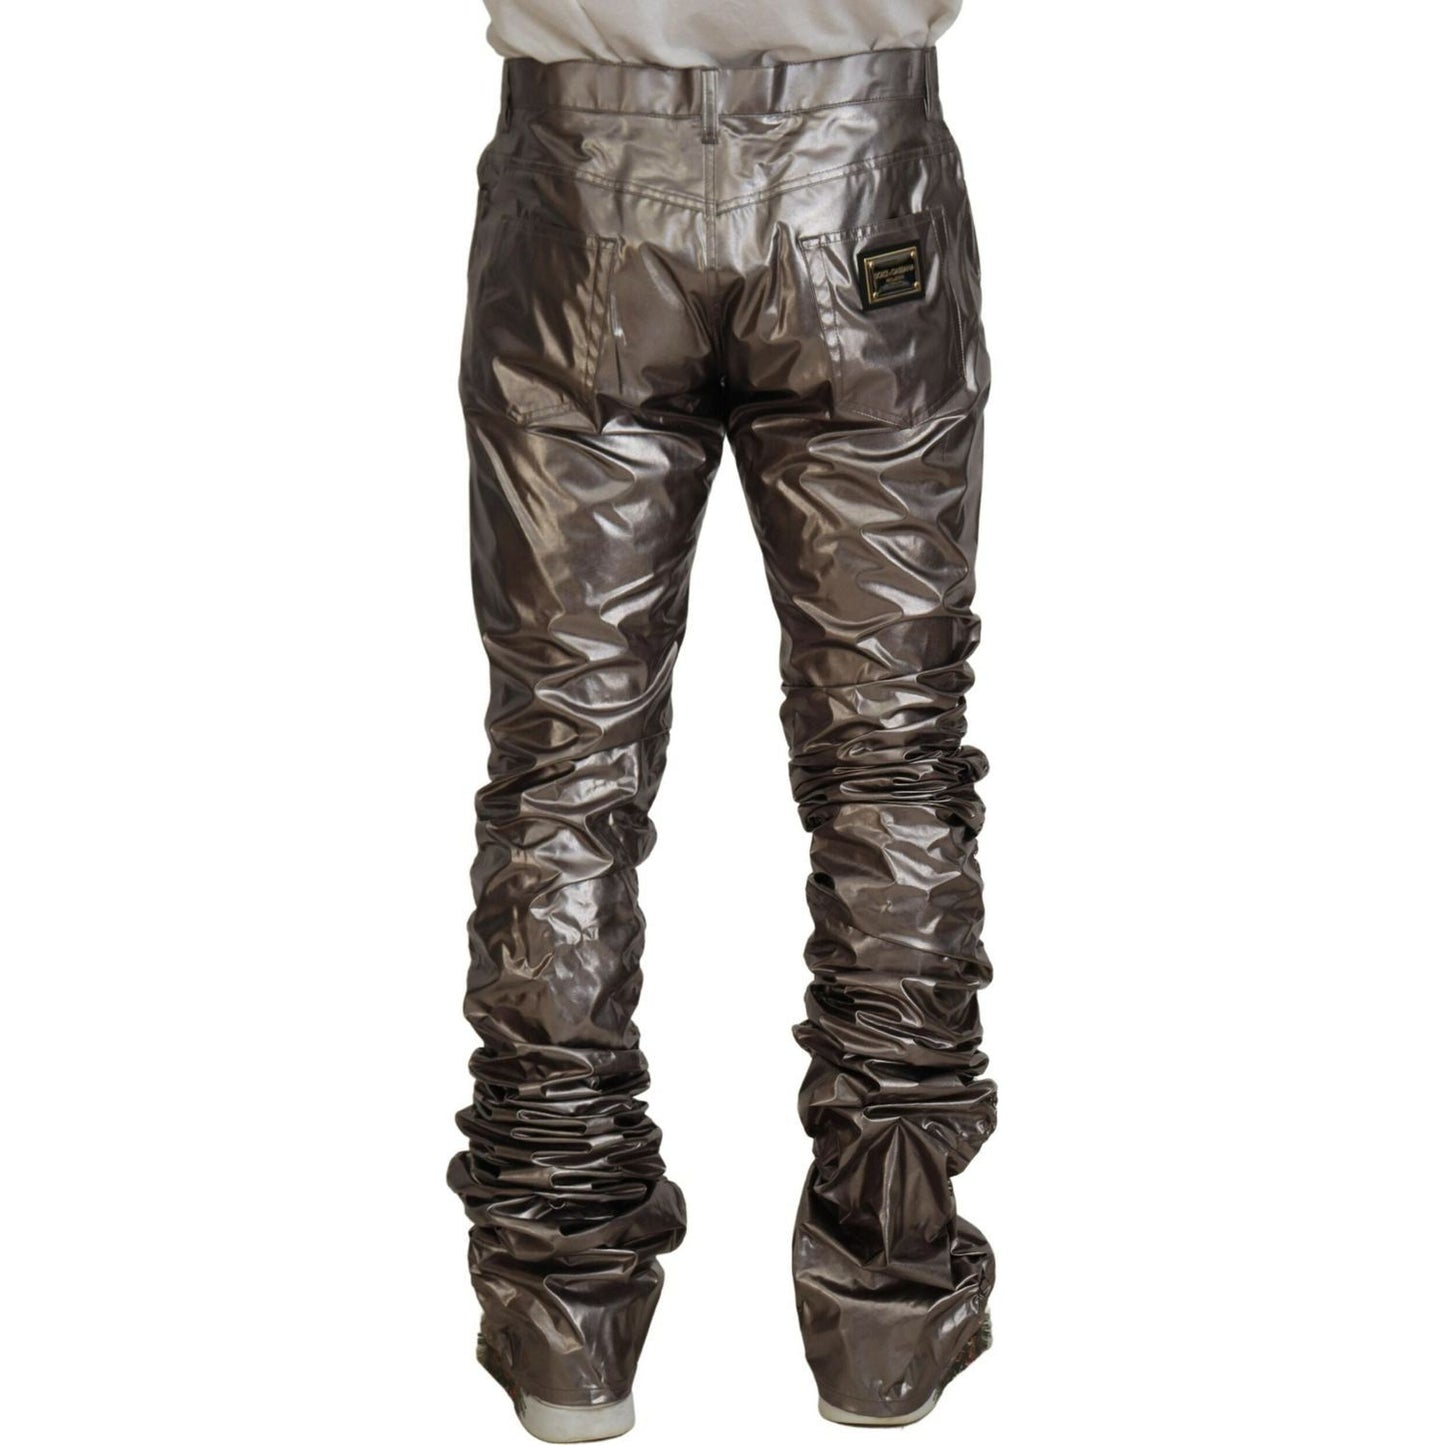 Dolce & Gabbana Metallic Silver Casual Pants silver-metallic-nylon-stretch-pants IMG_4851-scaled-57aee06c-dd4.jpg